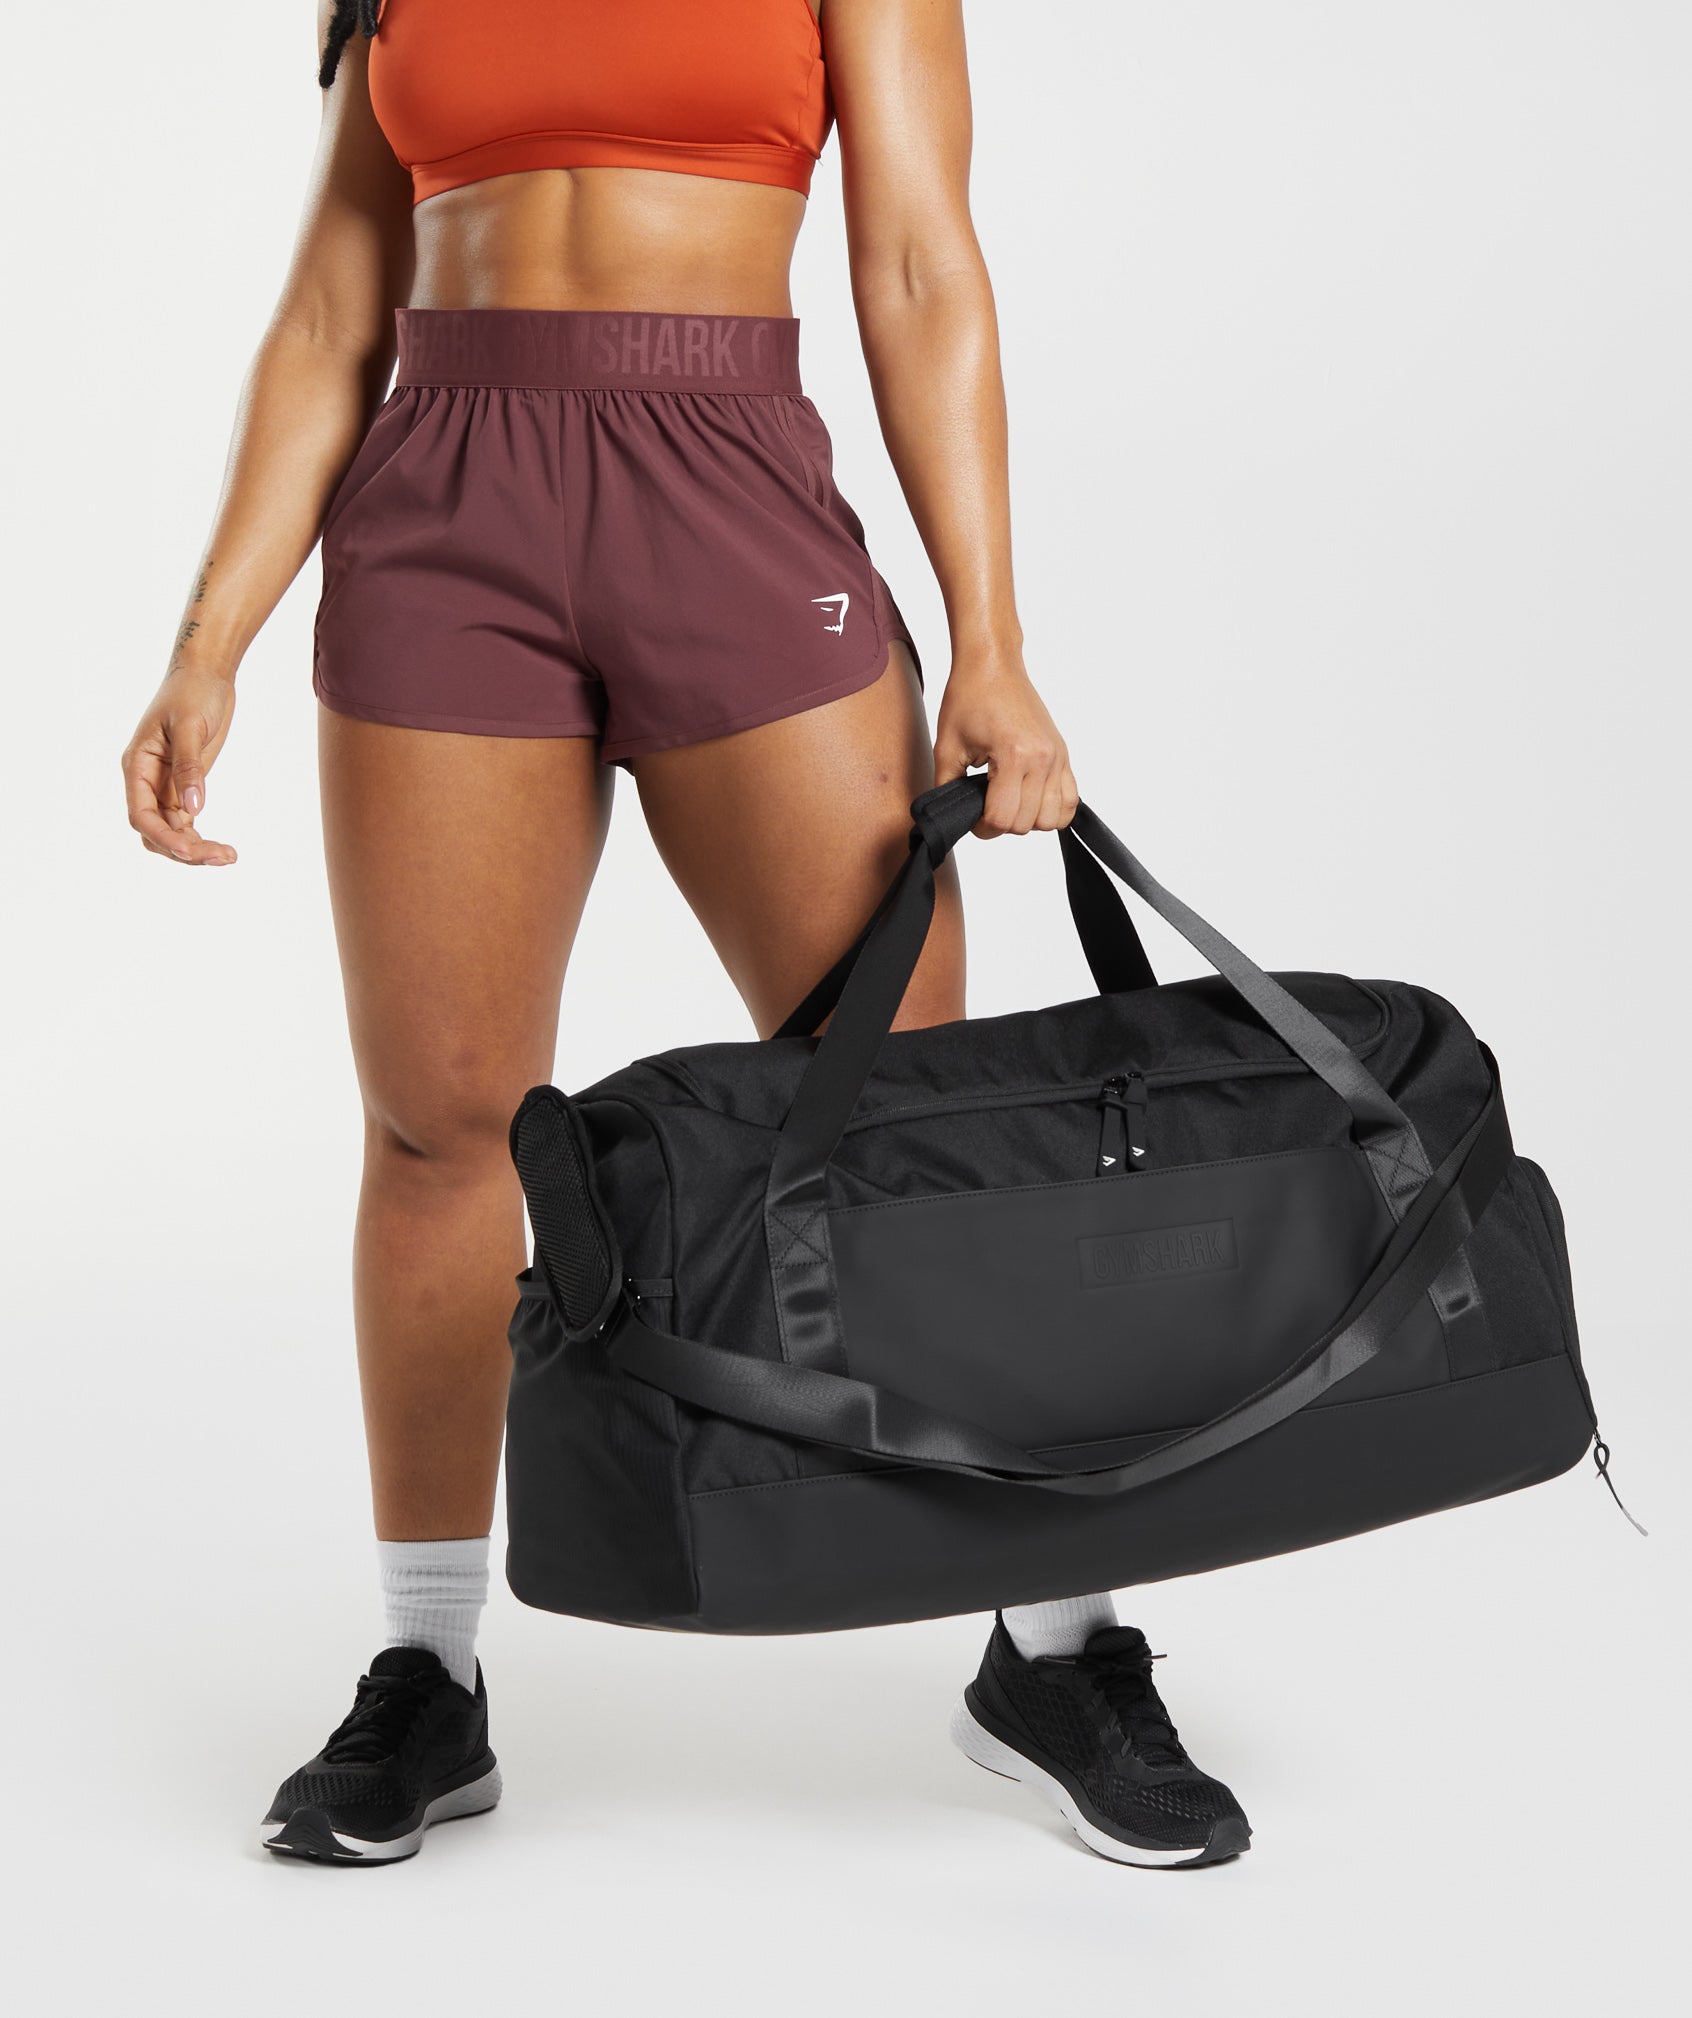 pitrice Large Gym Bag Gym Duffle Bag Gym Bag with Yoga Mat Holder for  Transporting Organizing 